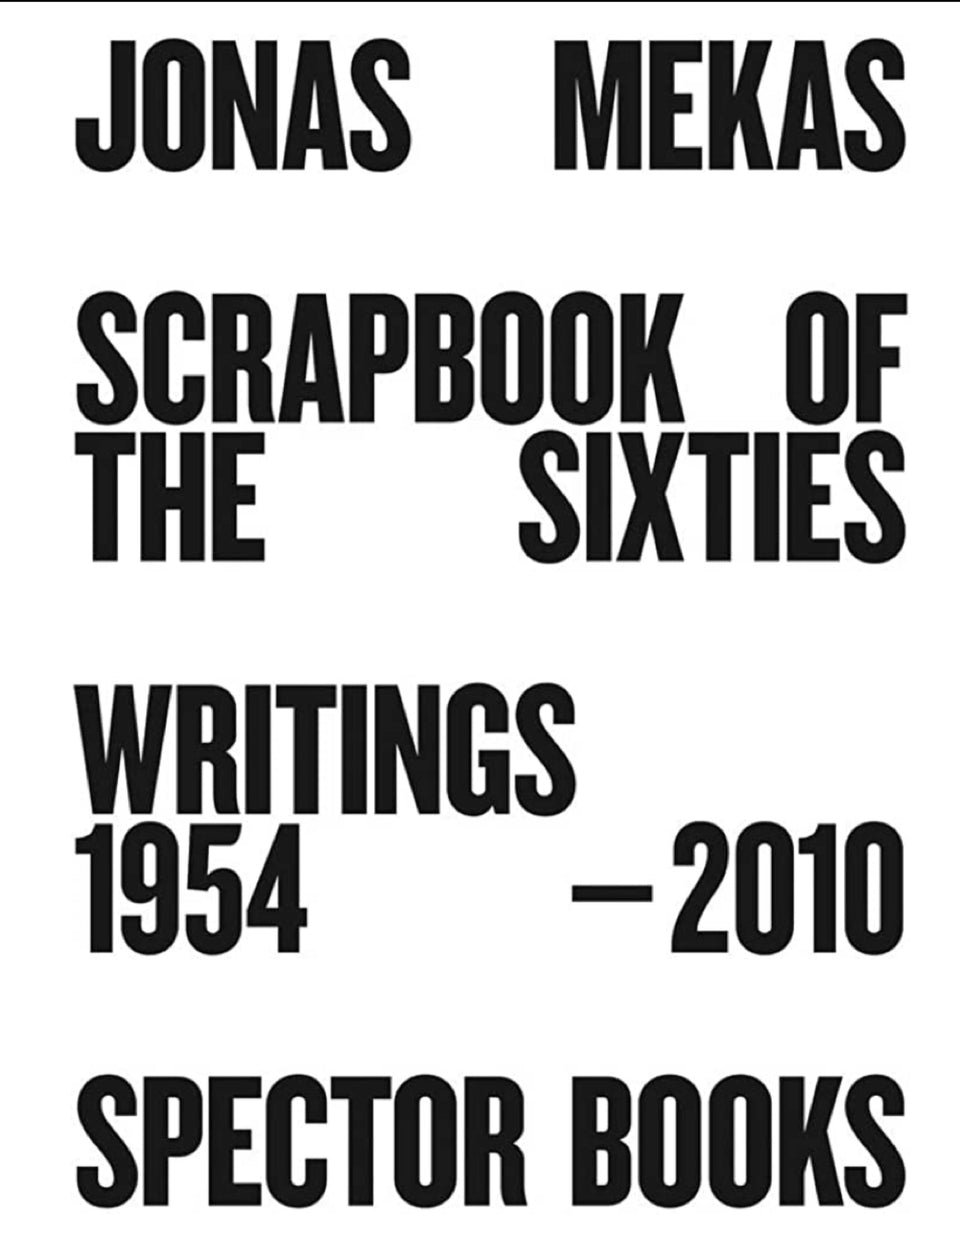 Jonas Mekas: Scrapbook of the Sixties - image_975a9142-b89d-41fe-991d-dd6dd9b8da02